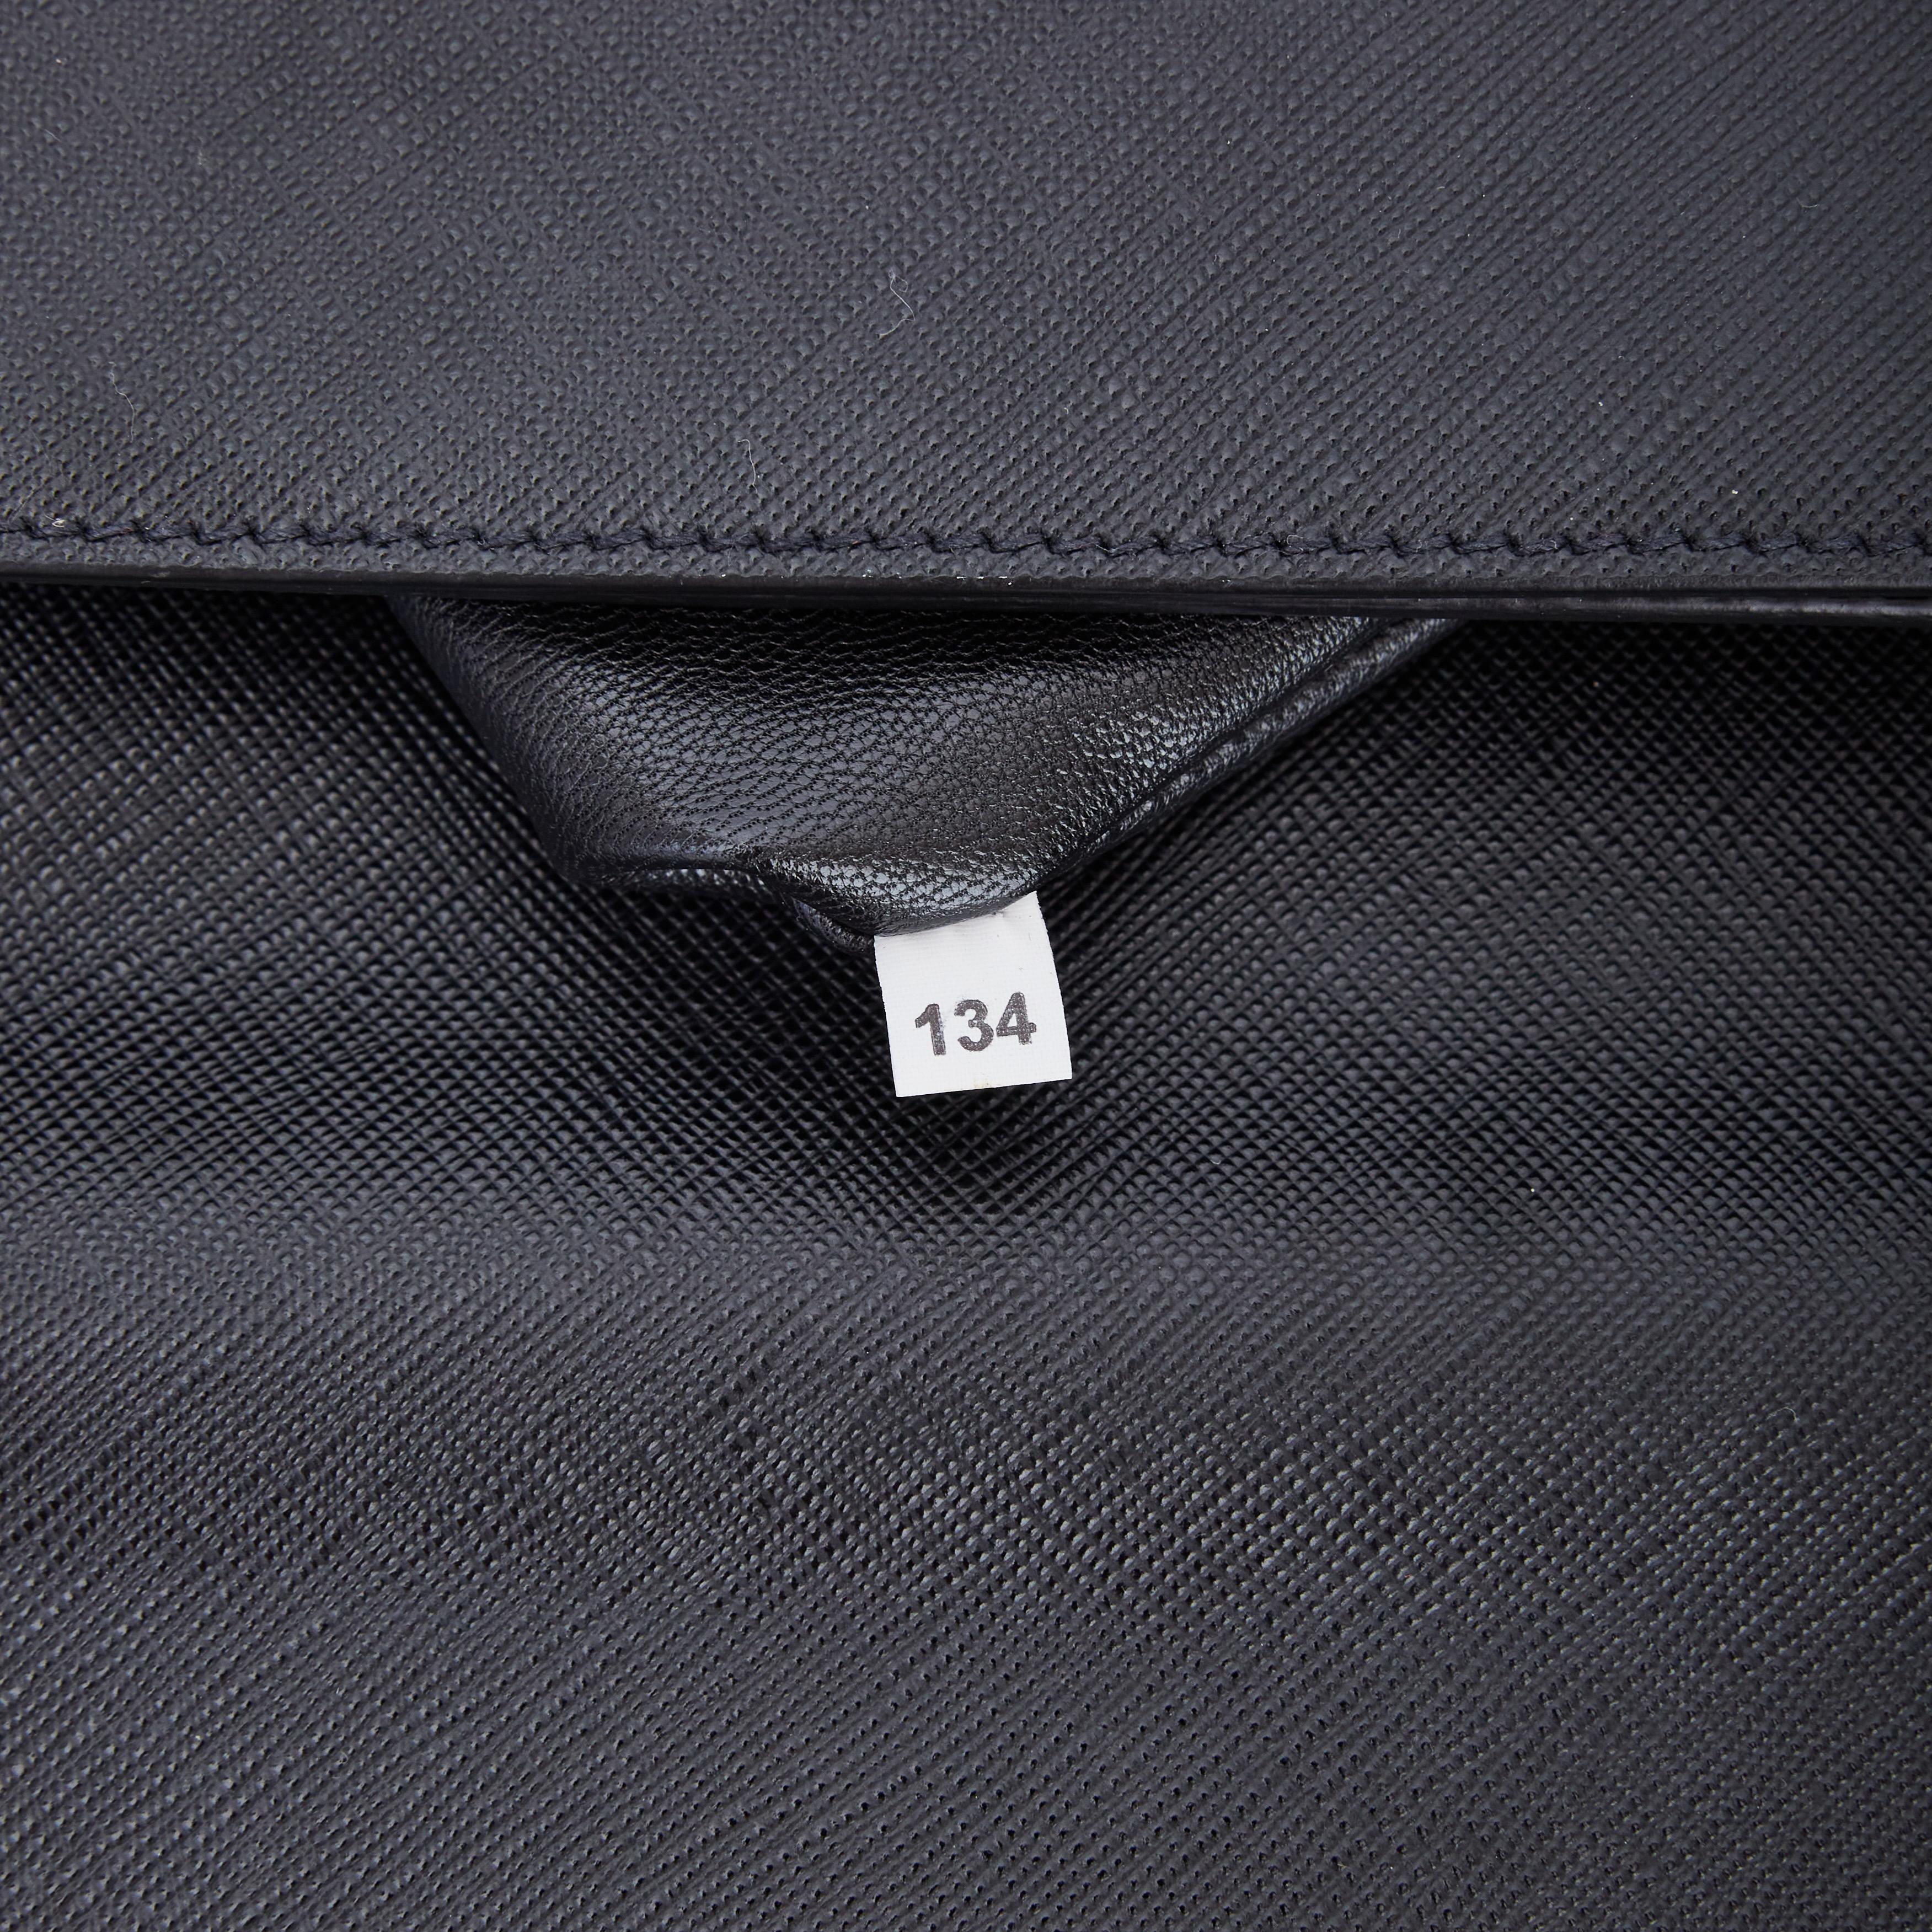 Prada Vintage Black Saffiano Leather Briefcase For Sale 4